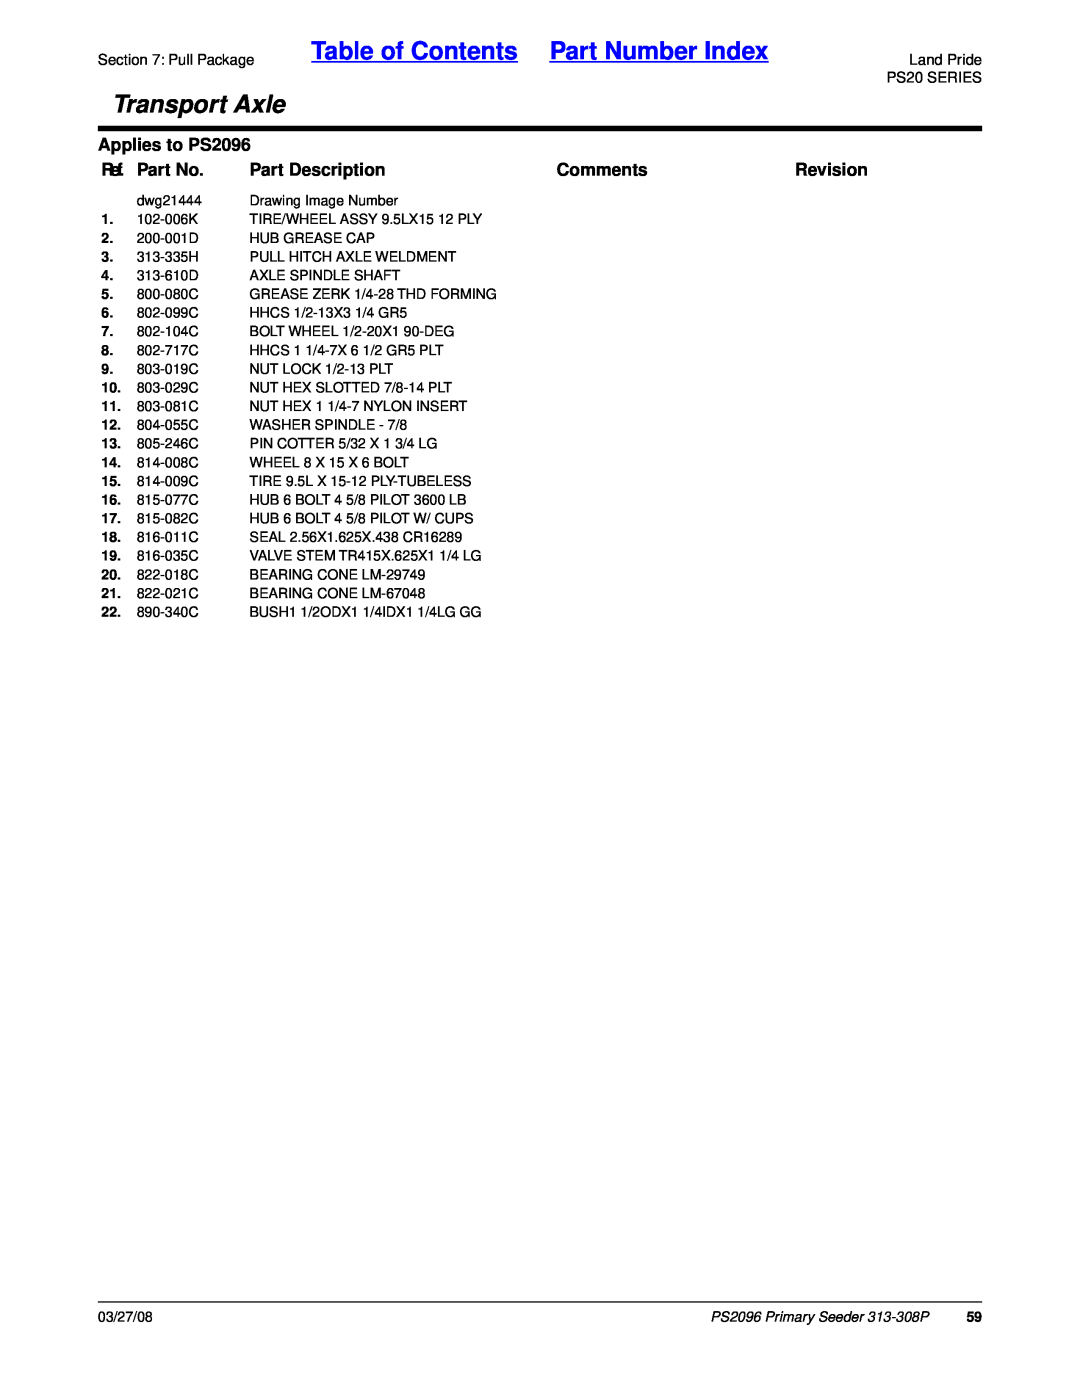 Land Pride manual Table of Contents Part Number Index, Transport Axle, Applies to PS2096, Ref. Part No, Part Description 